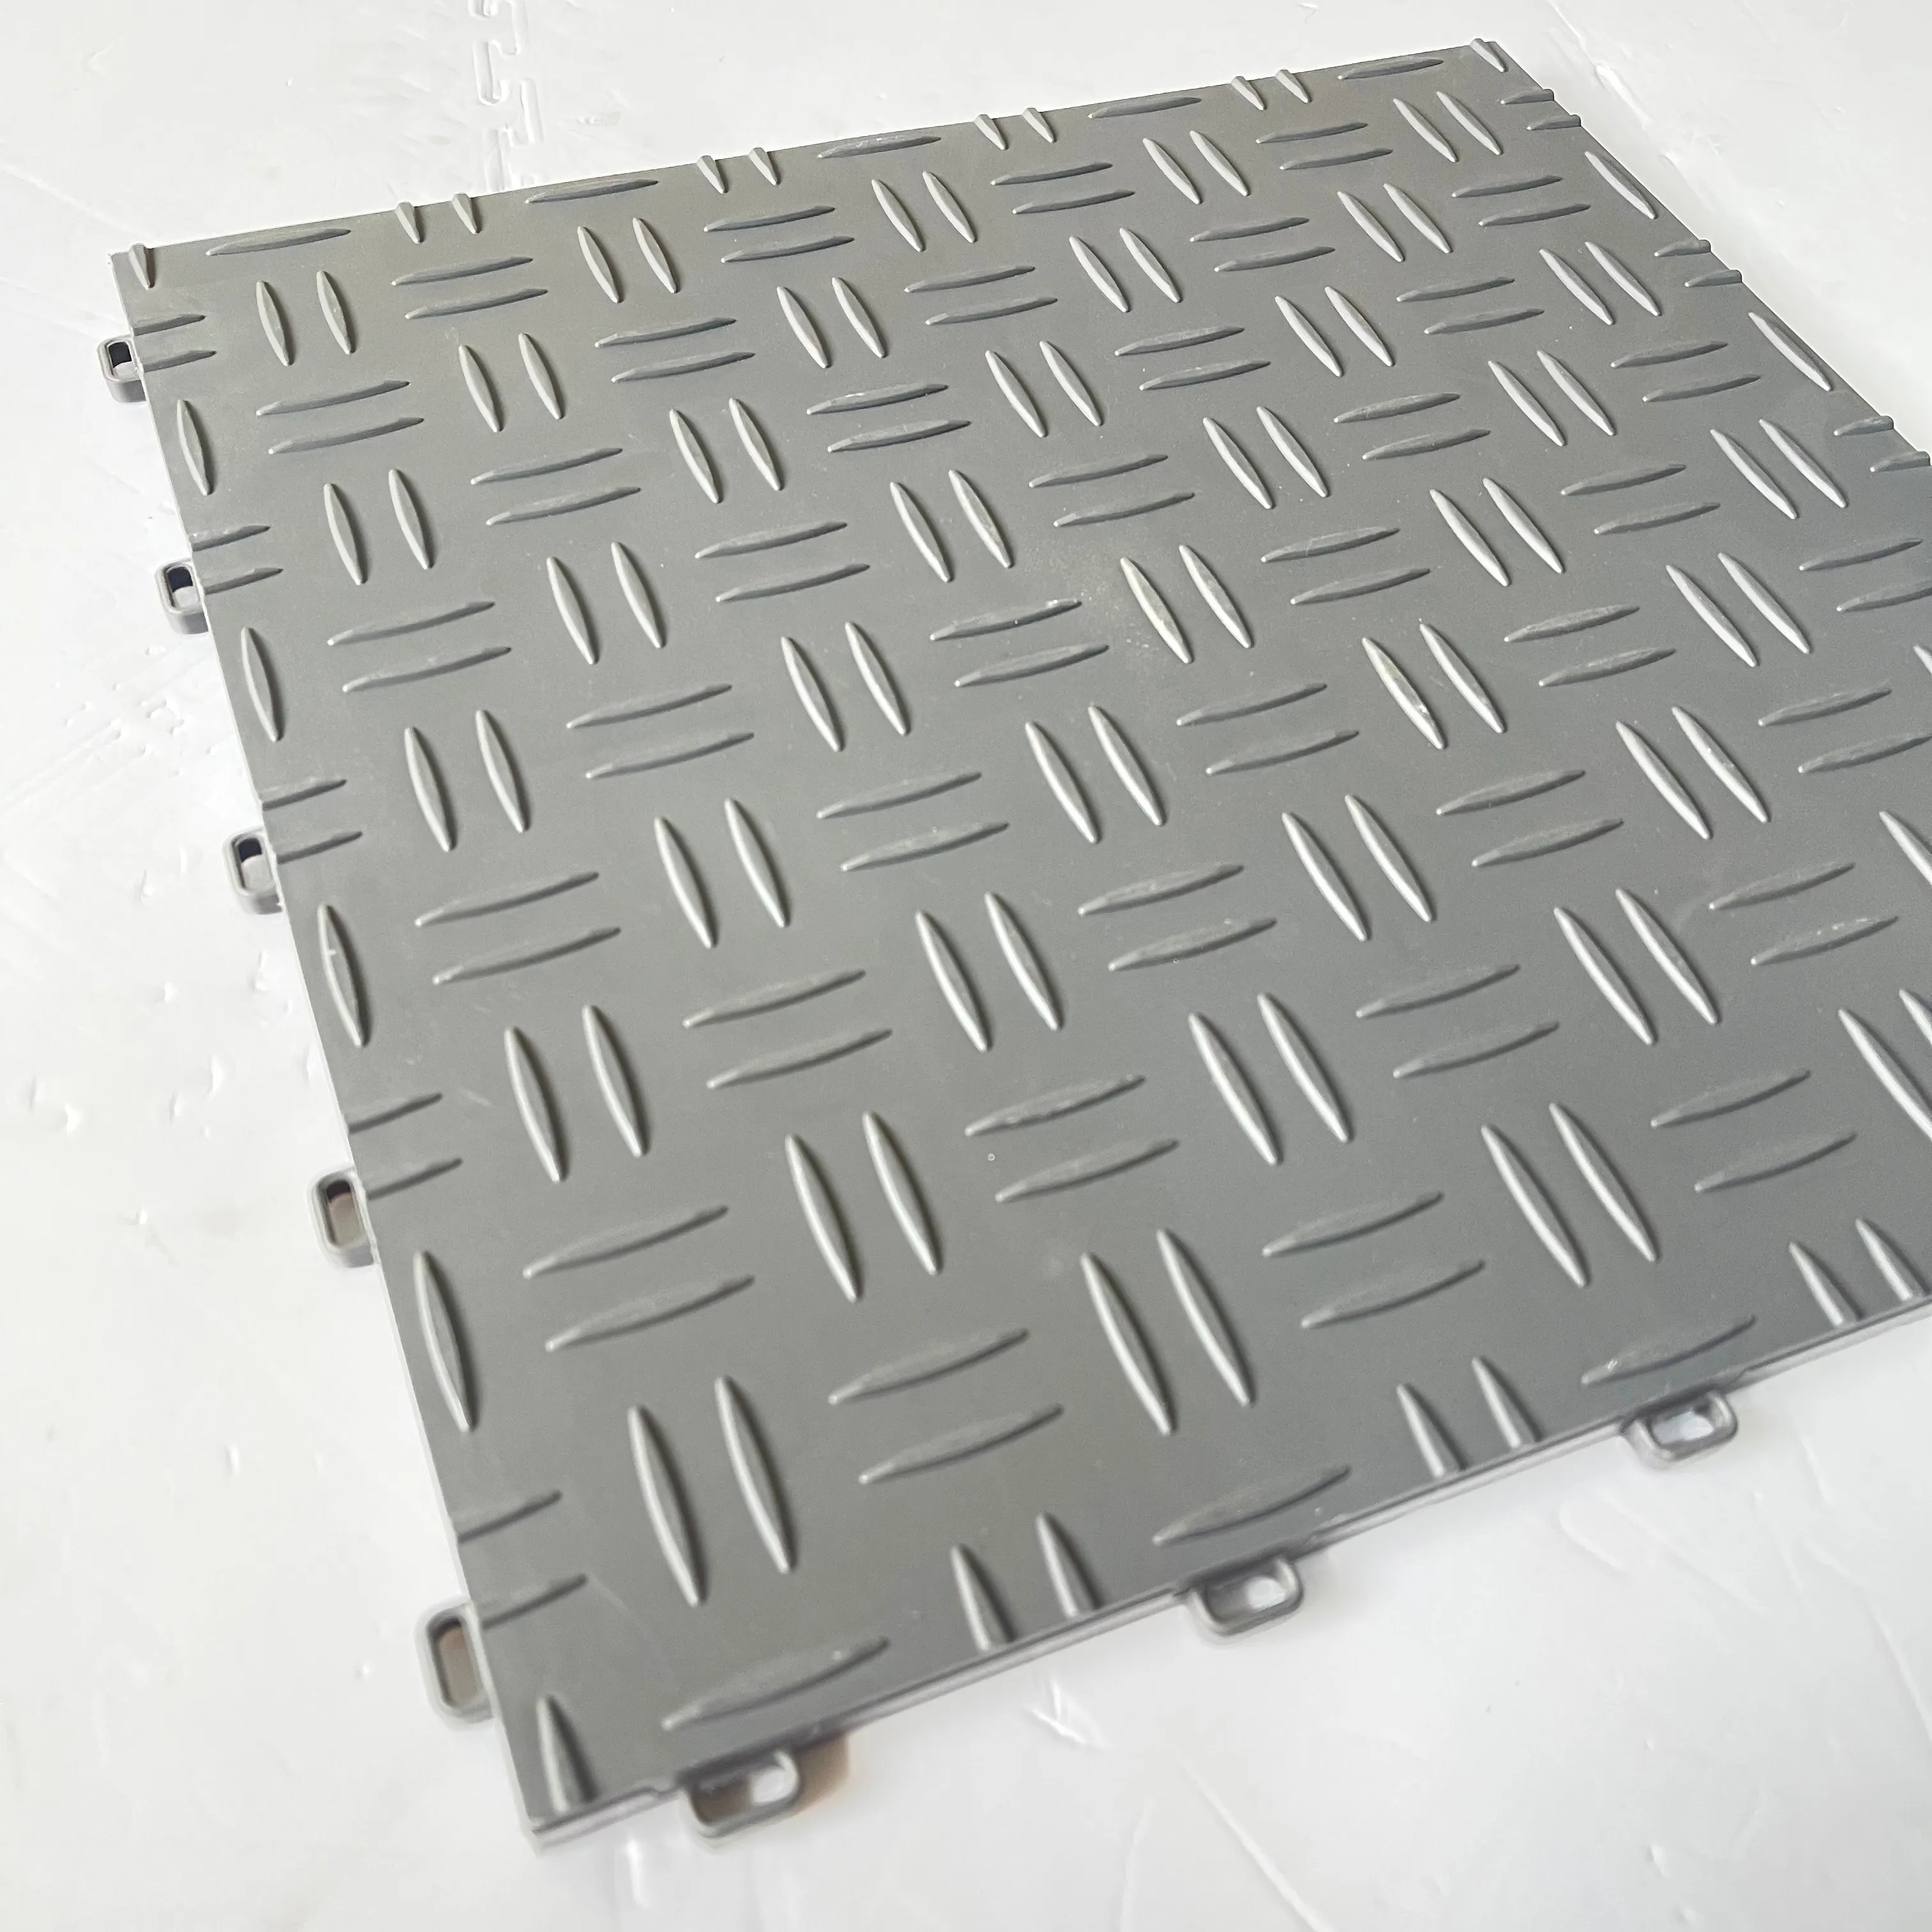 Diamond PVC interlocking plastic Garage Flooring,outdoor interlocking floor tiles for garage floor